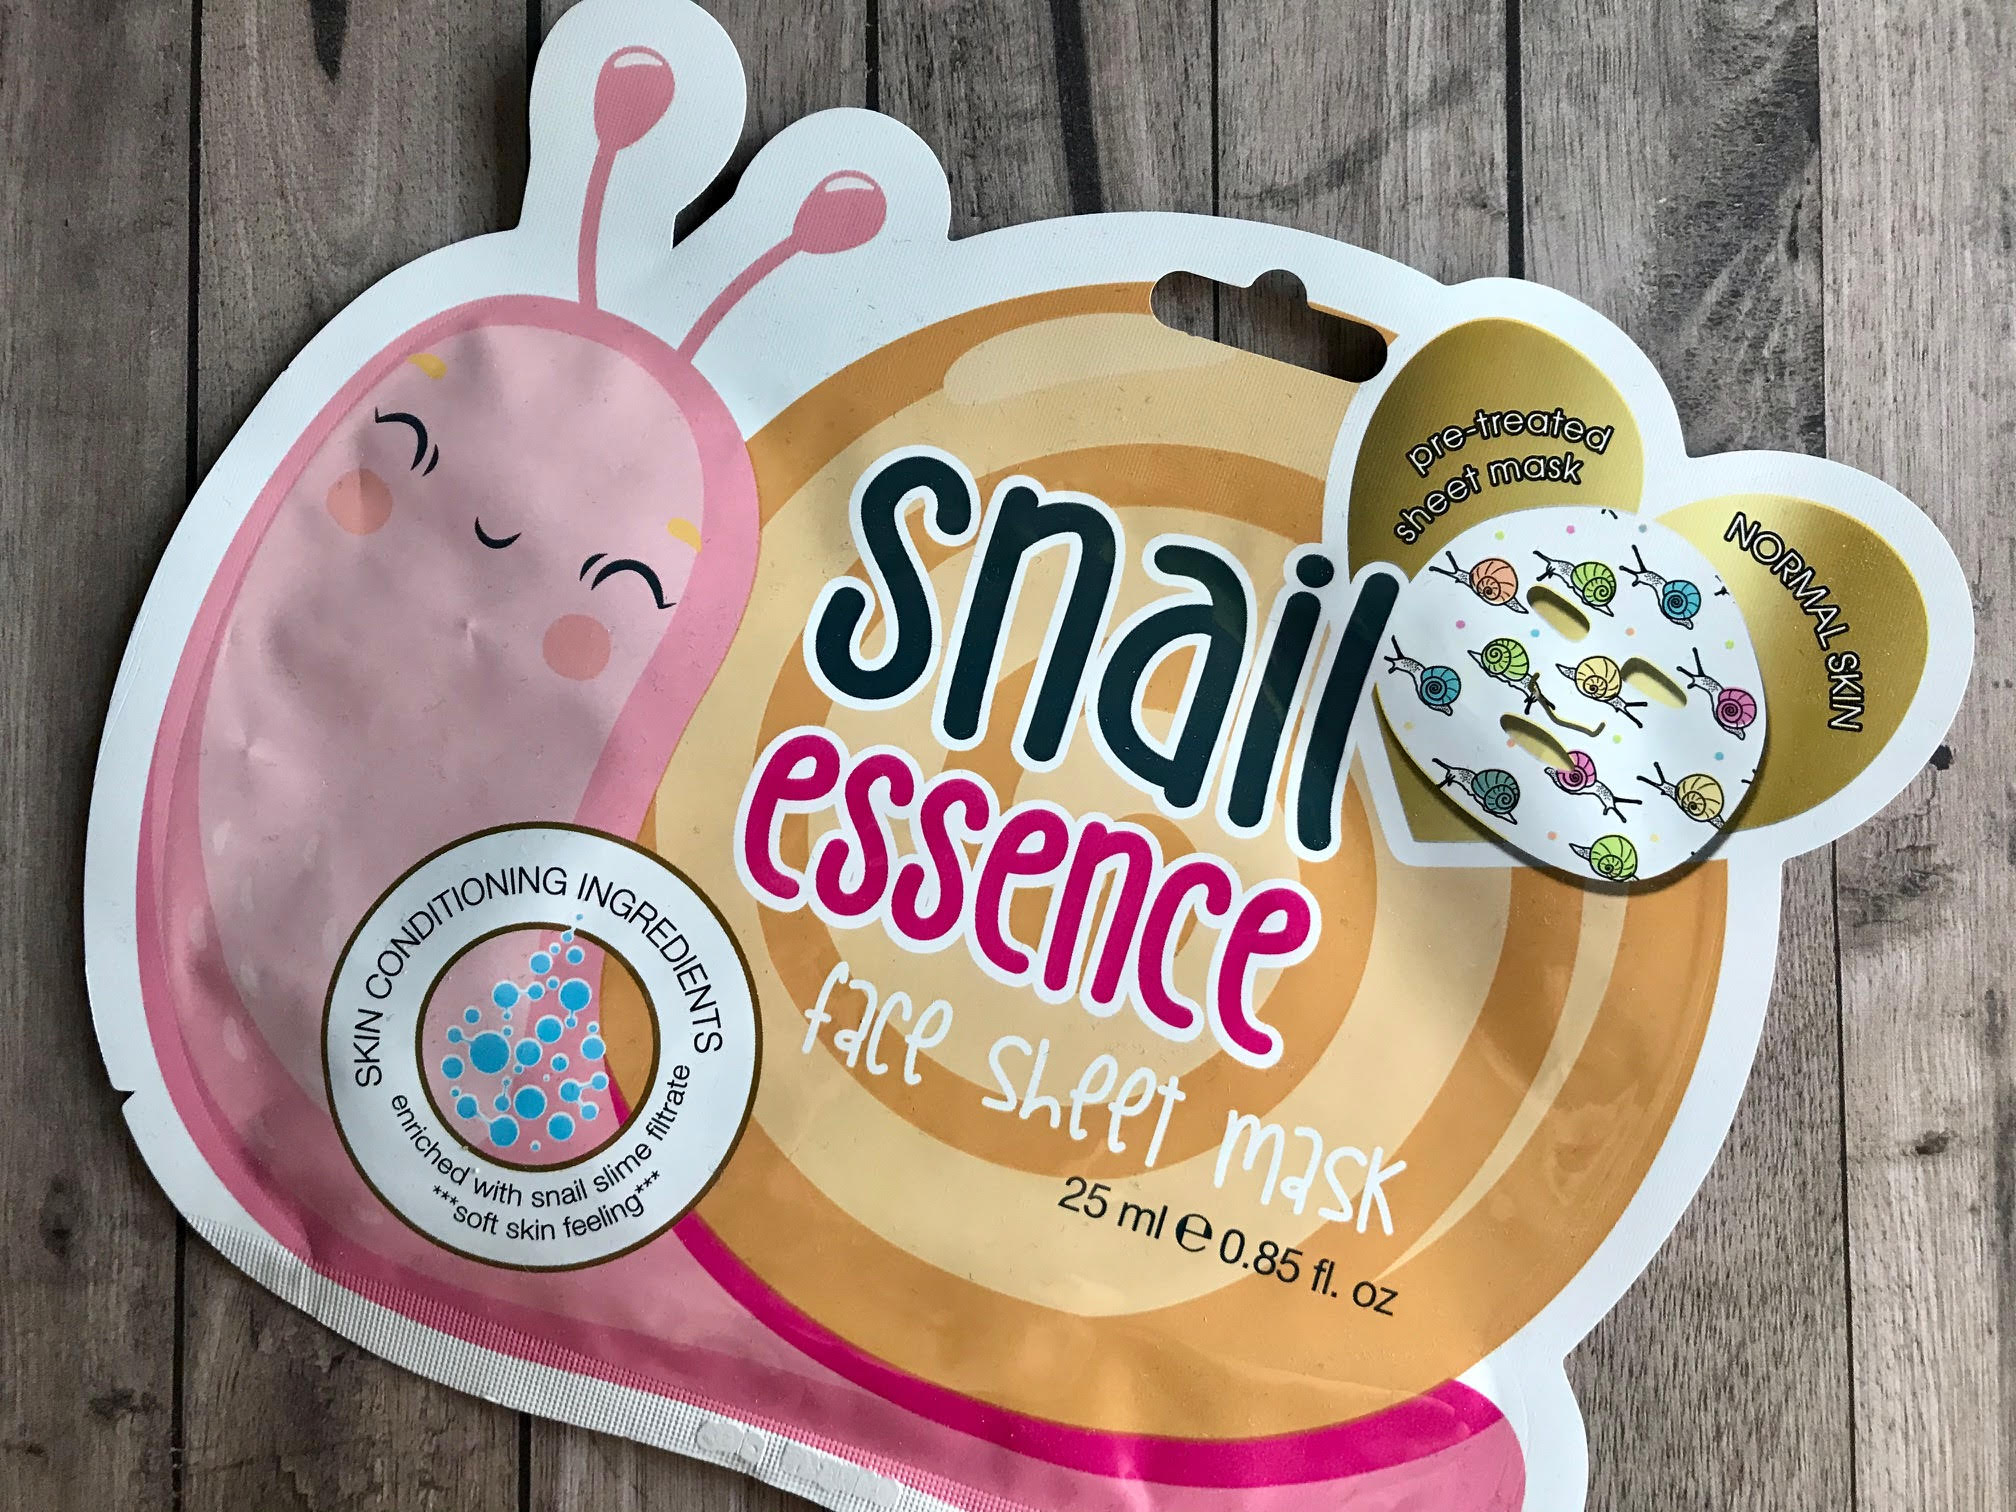 snail essence face sheet mask